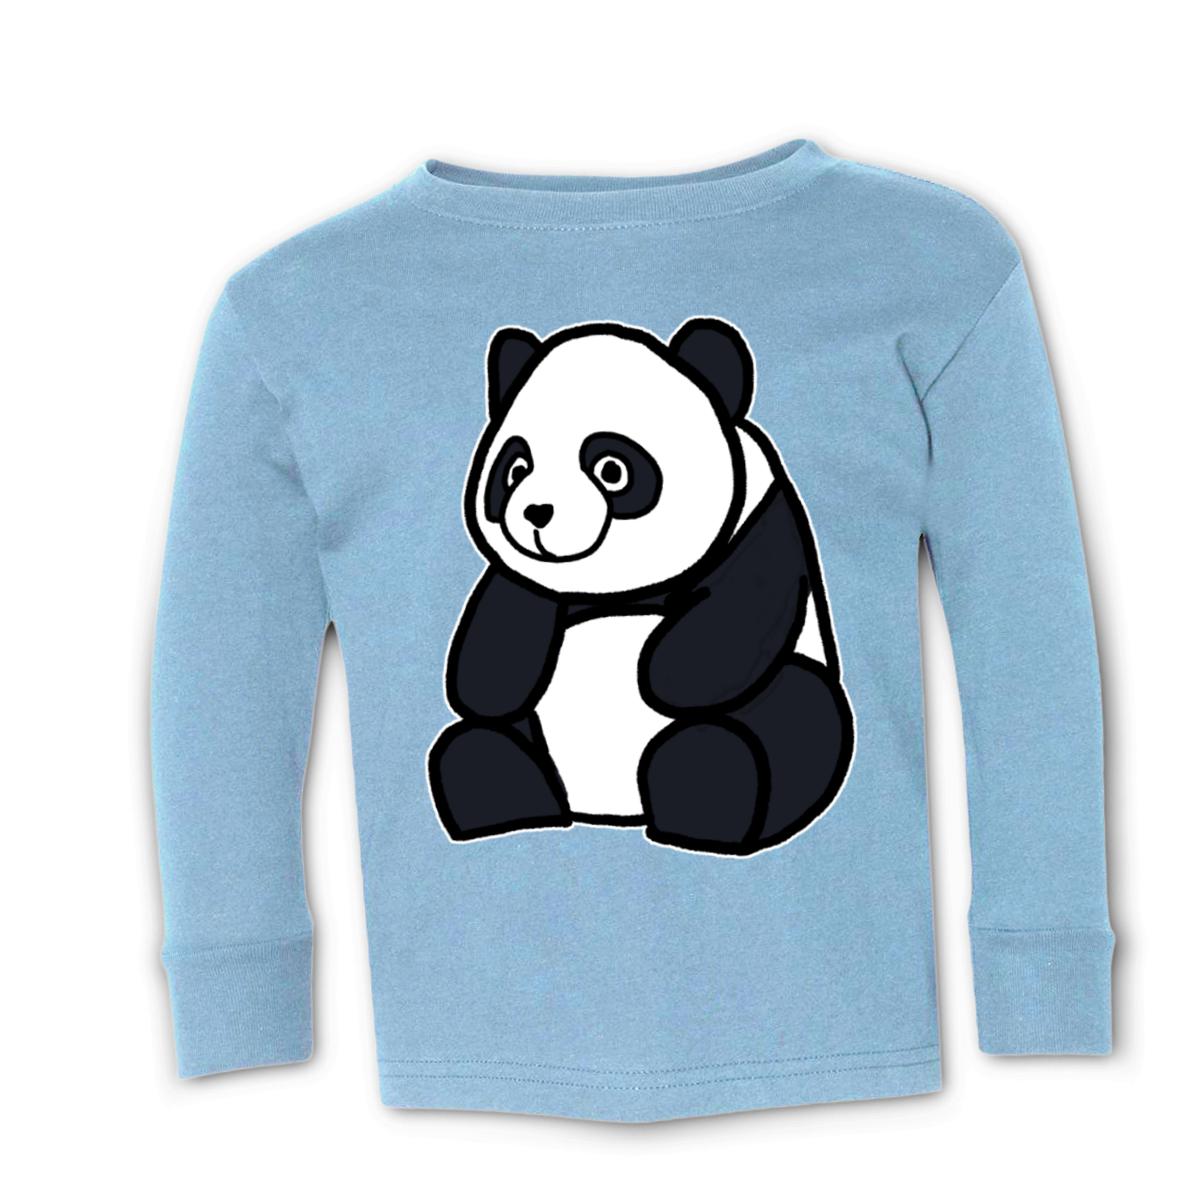 Panda Kid's Long Sleeve Tee Large light-blue